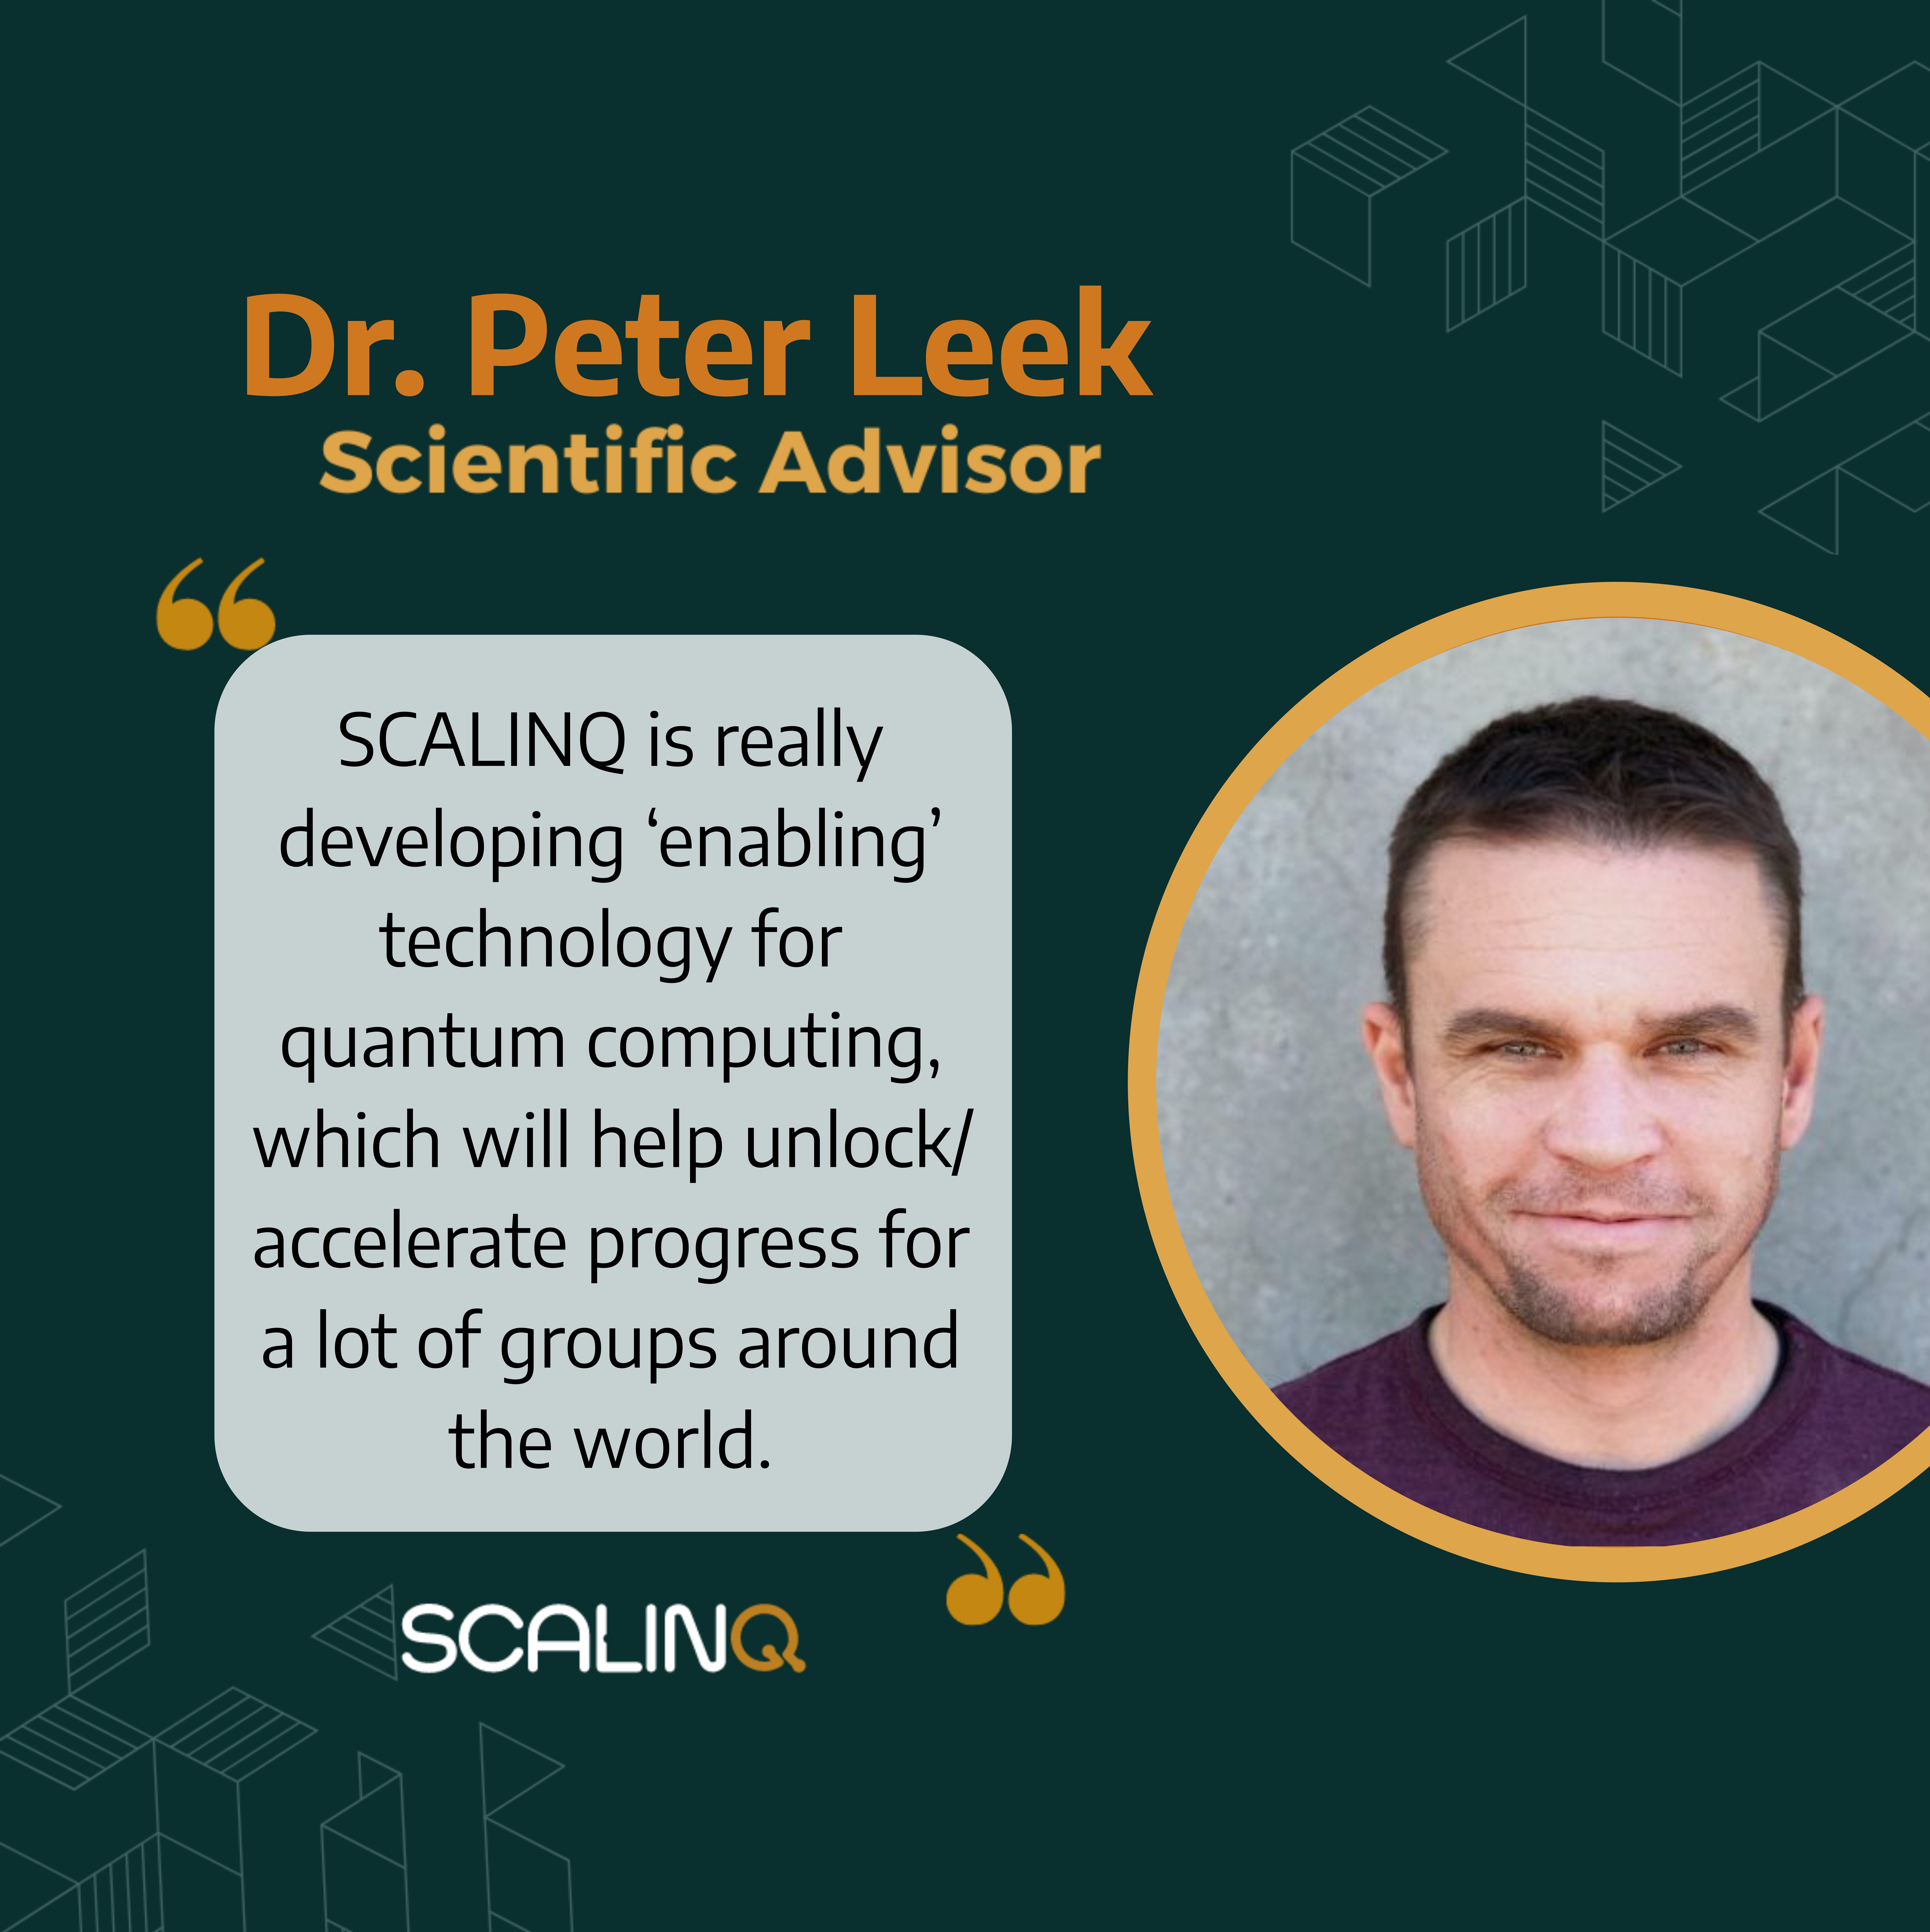 Dr. Peter Leek, SCALINQ's Scientific Advisor